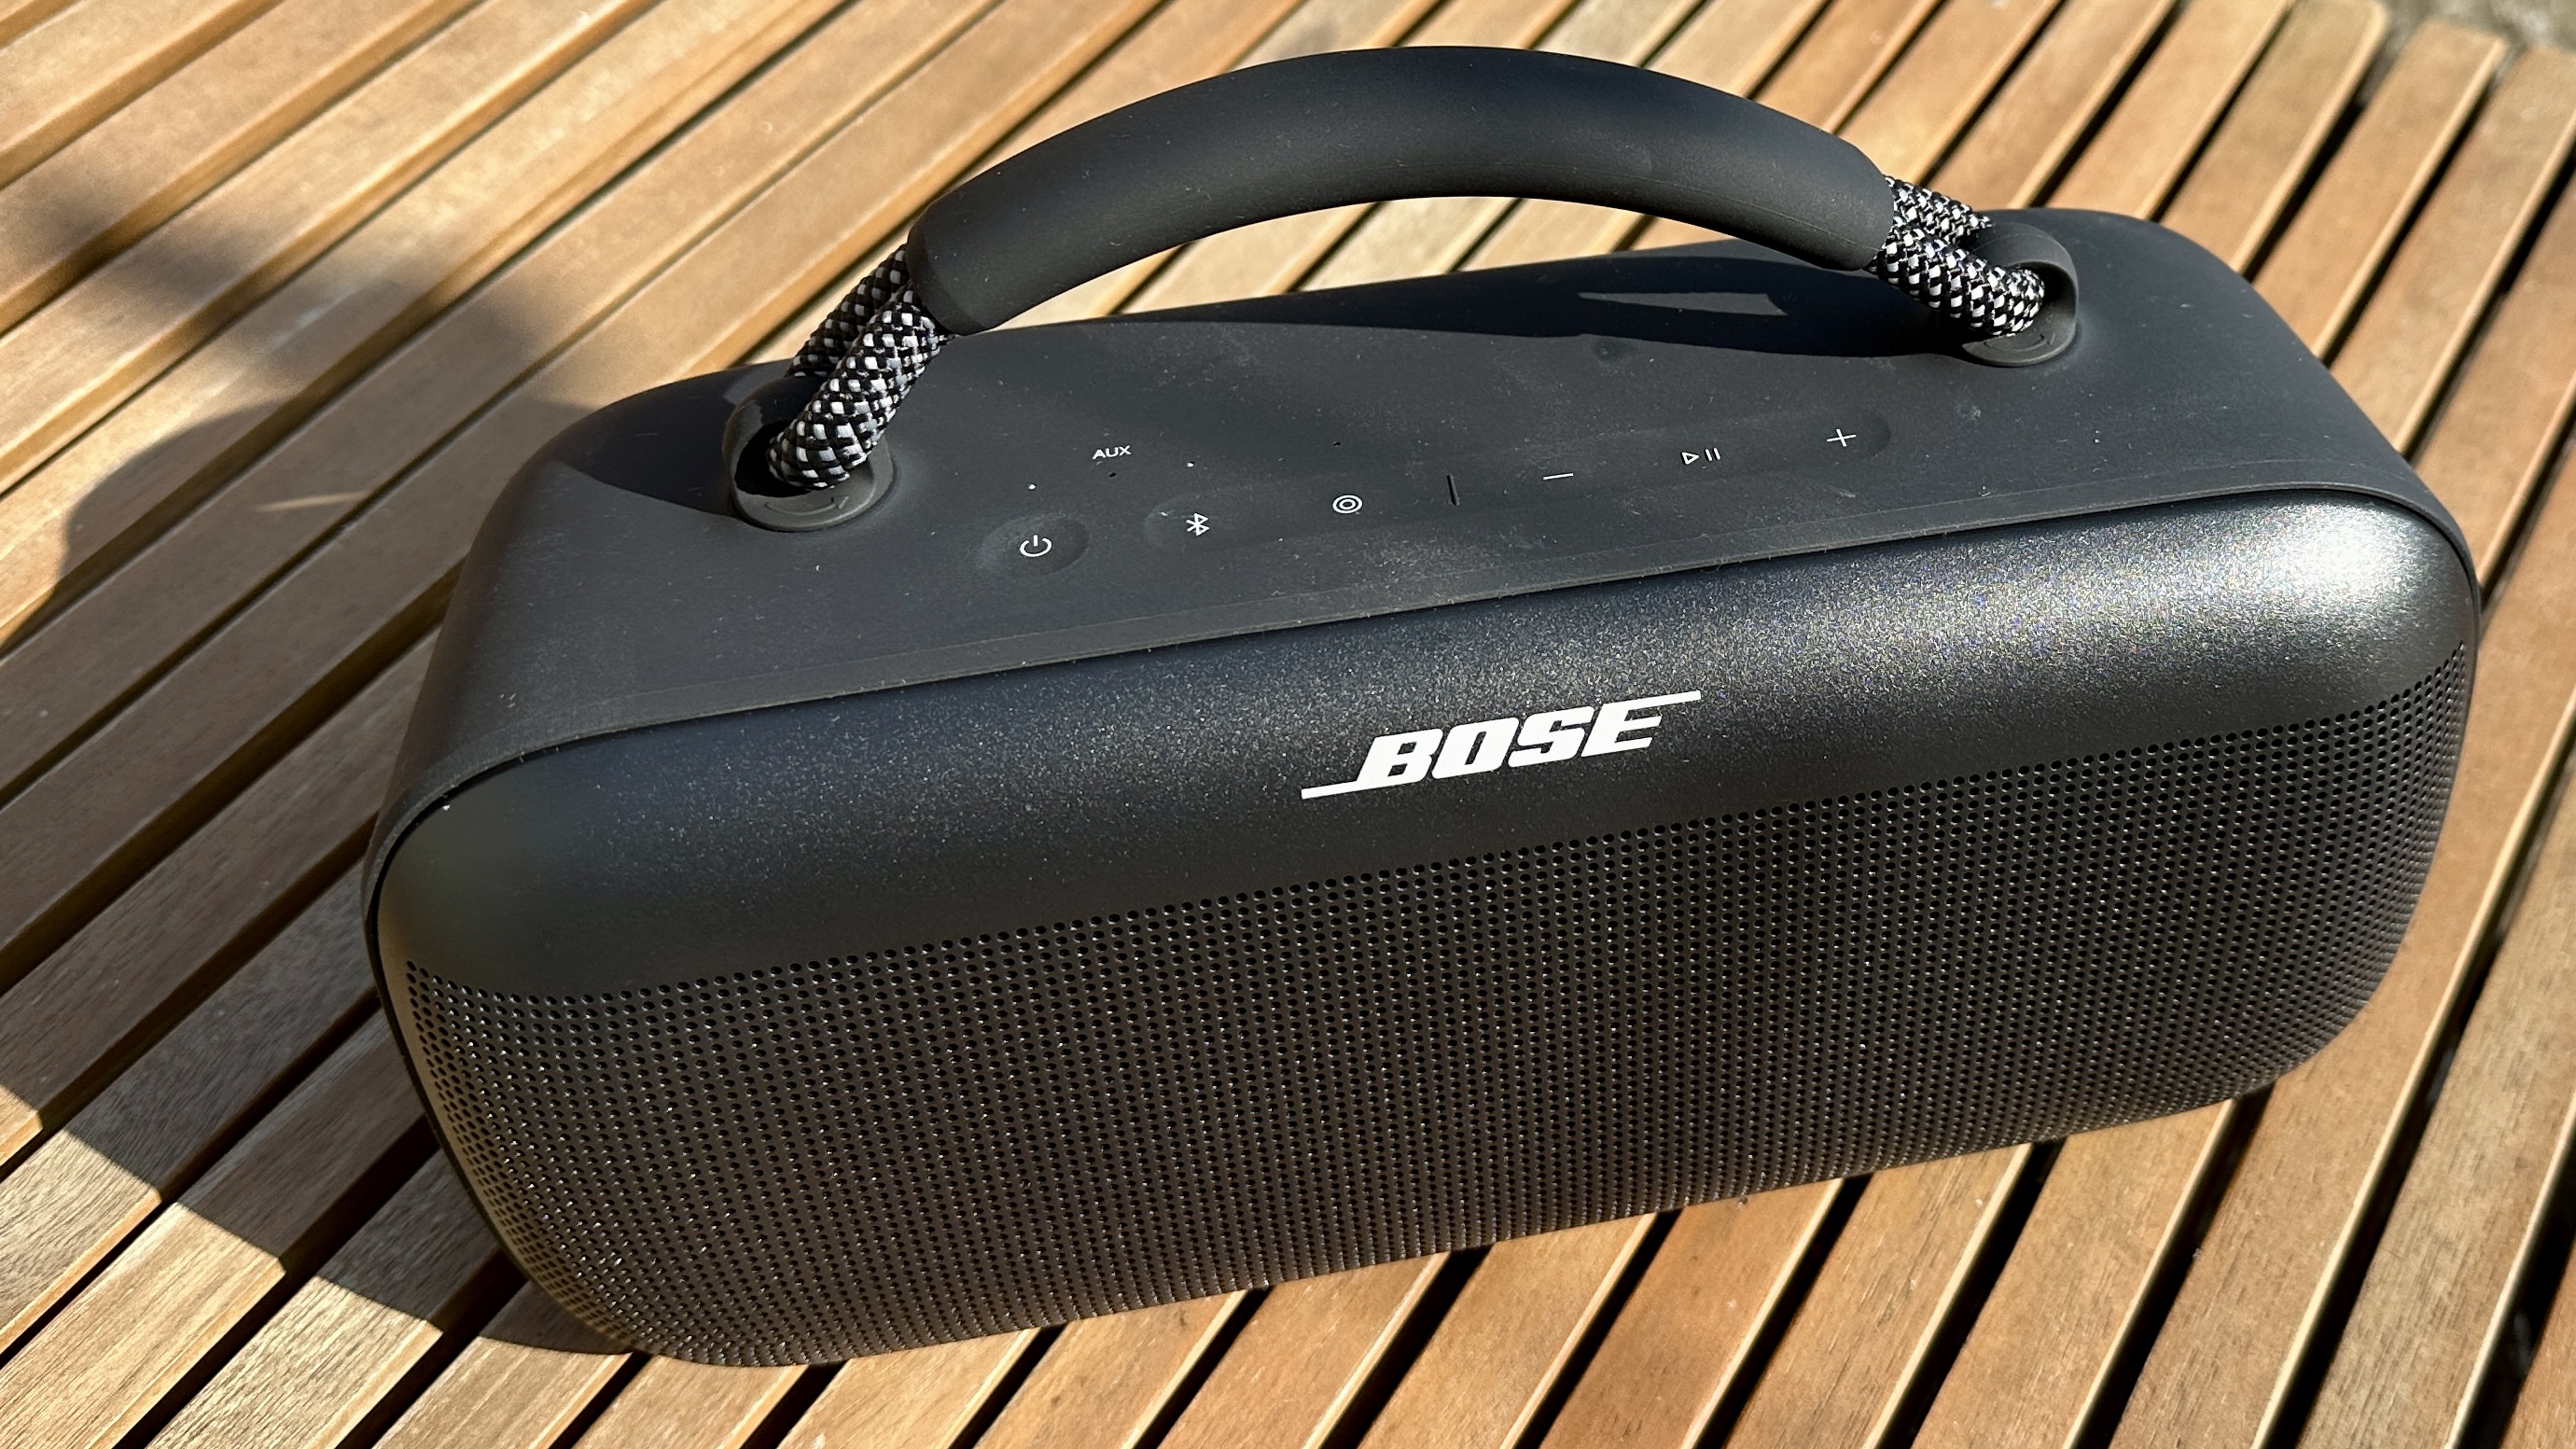 Bose SoundLink Max Bluetooth speaker on wooden table